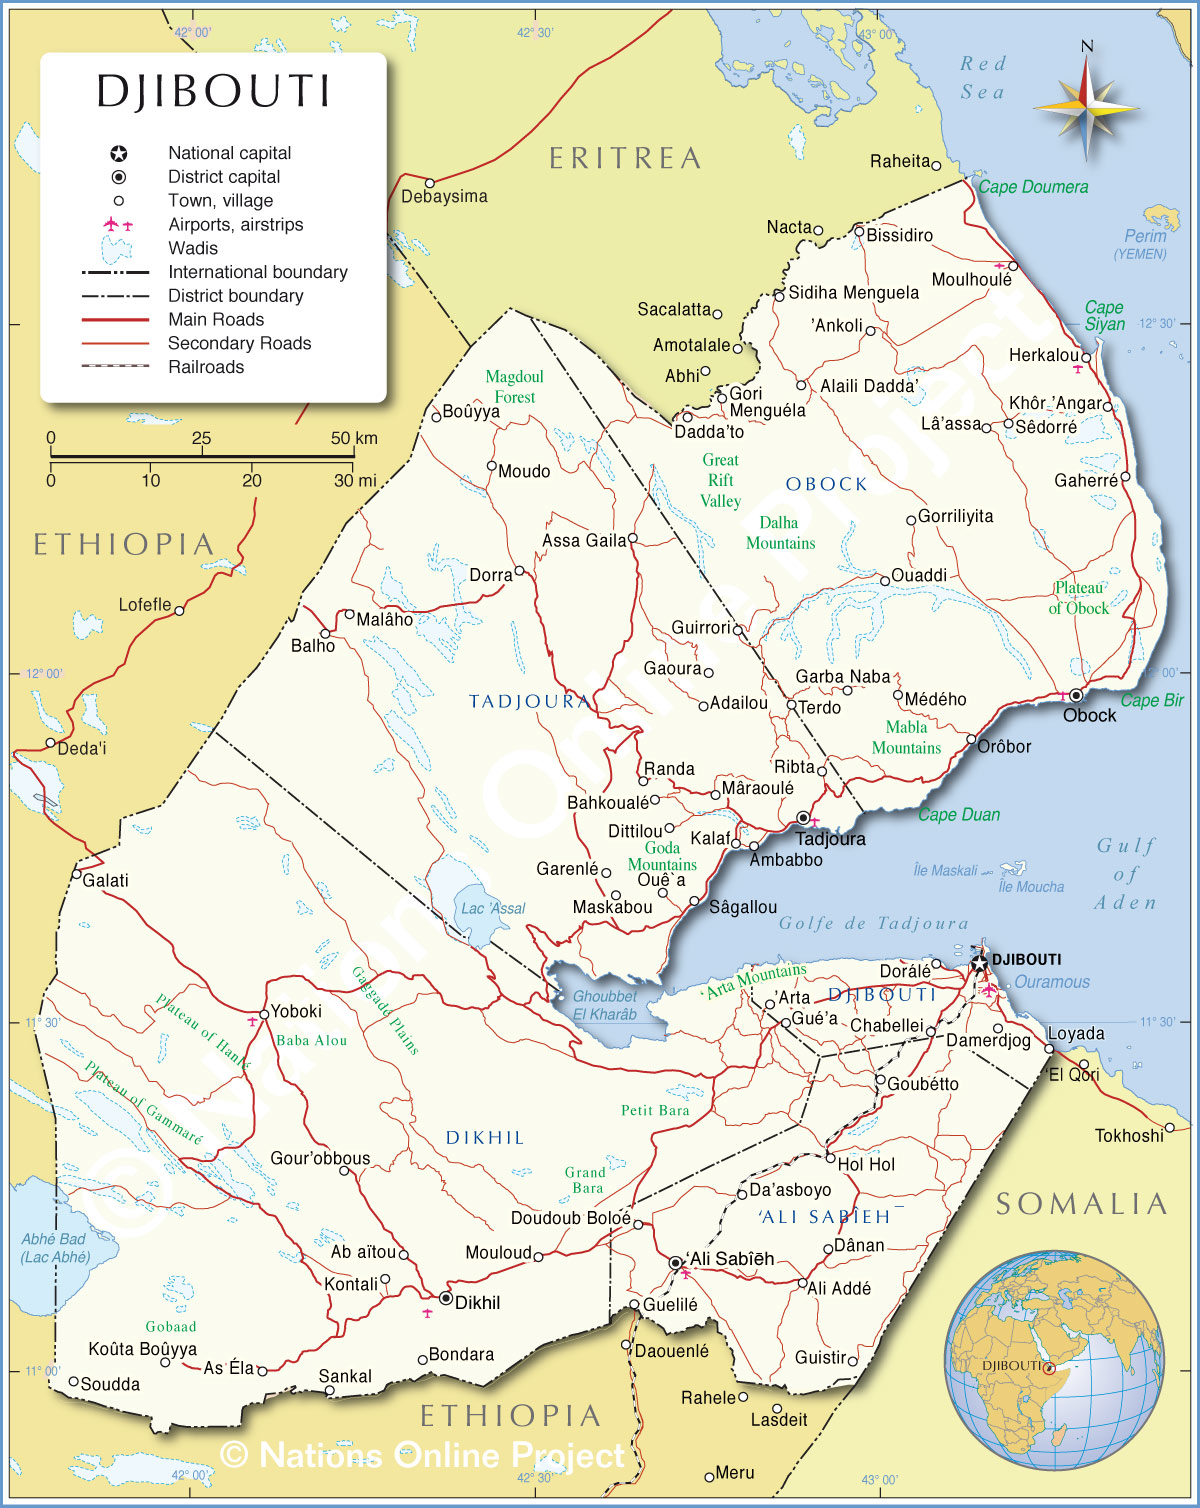 General Map of Djibouti